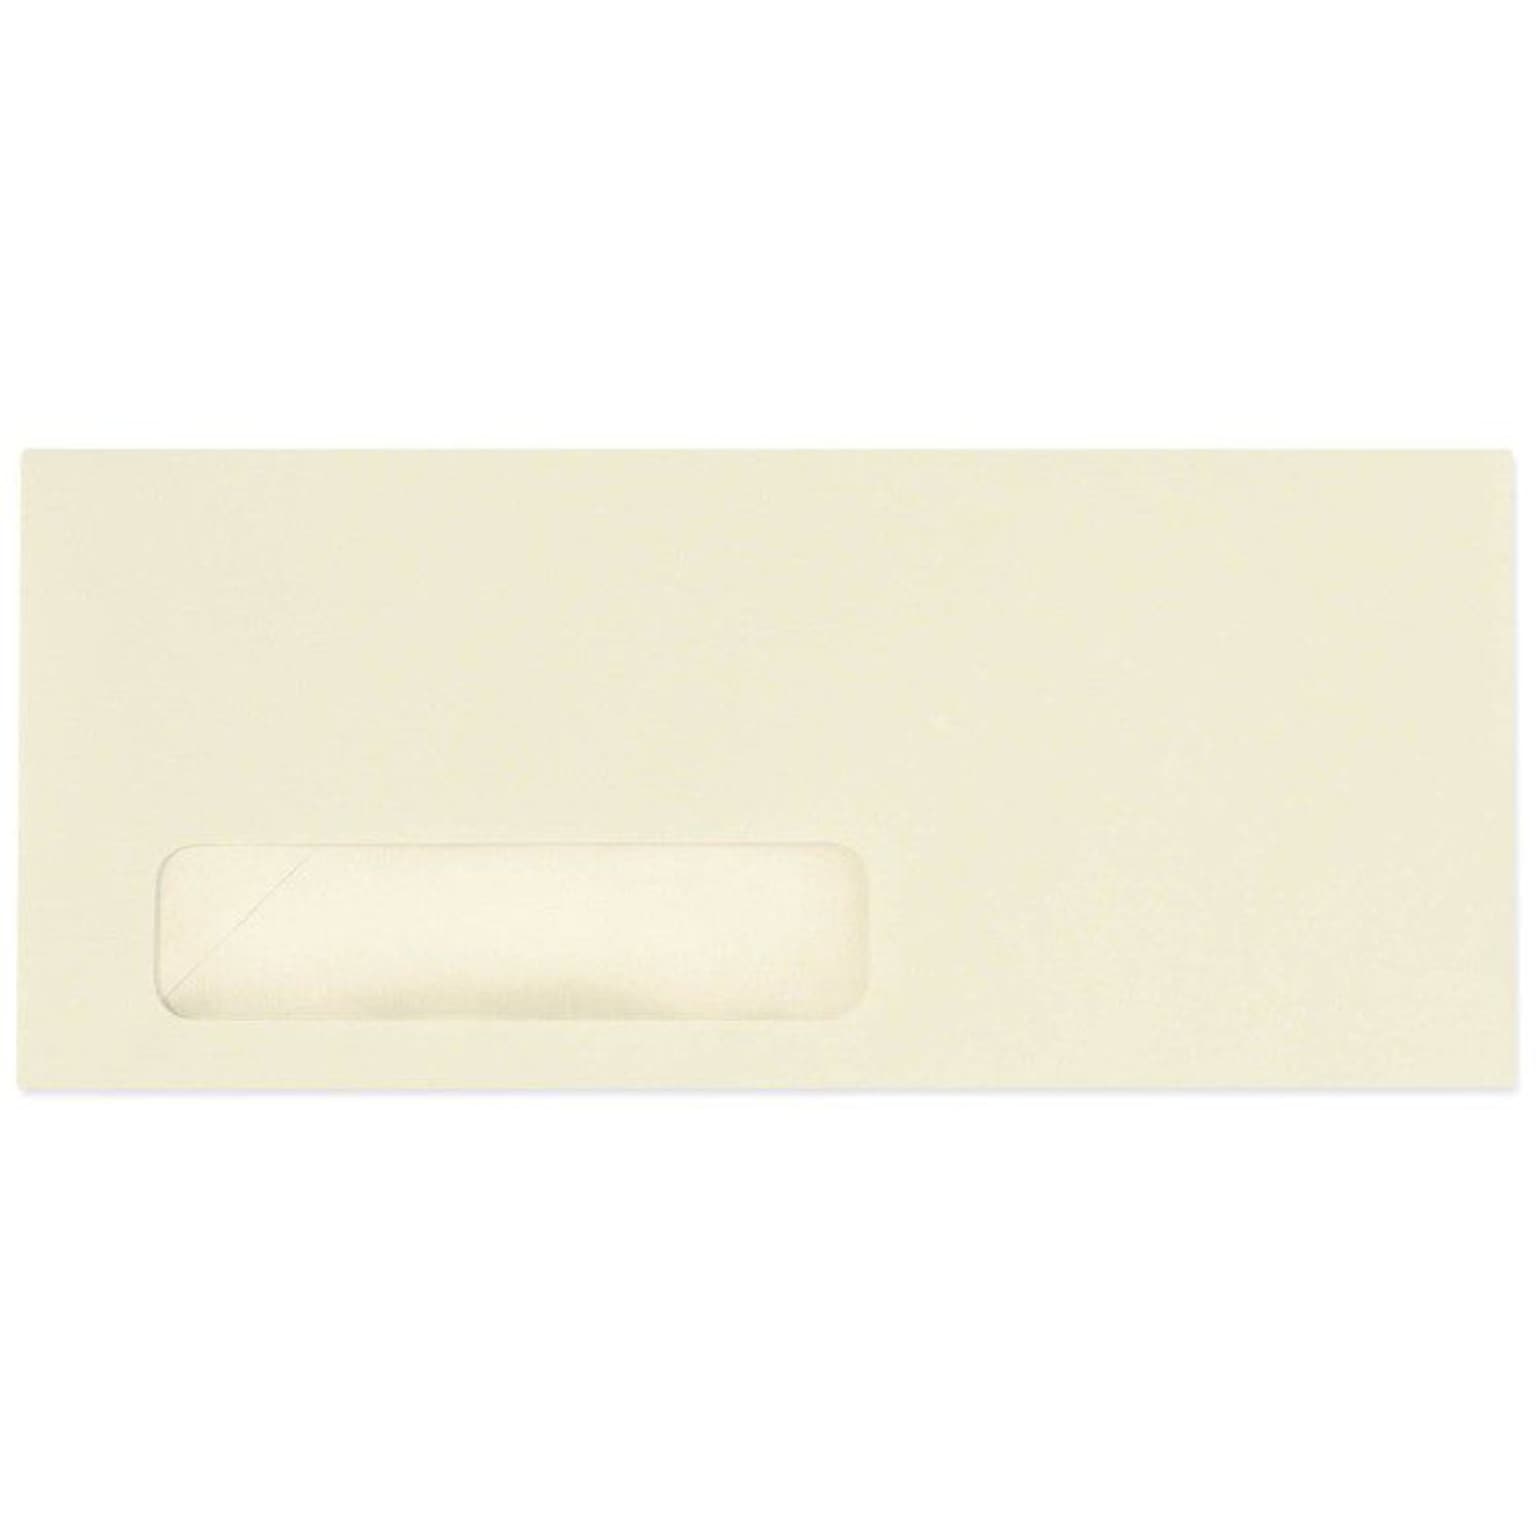 LUX Pastels Moistenable Glue #10 Window Envelope, 4 1/2 x 9 1/2, Ivory, 250/Box (4056-250)